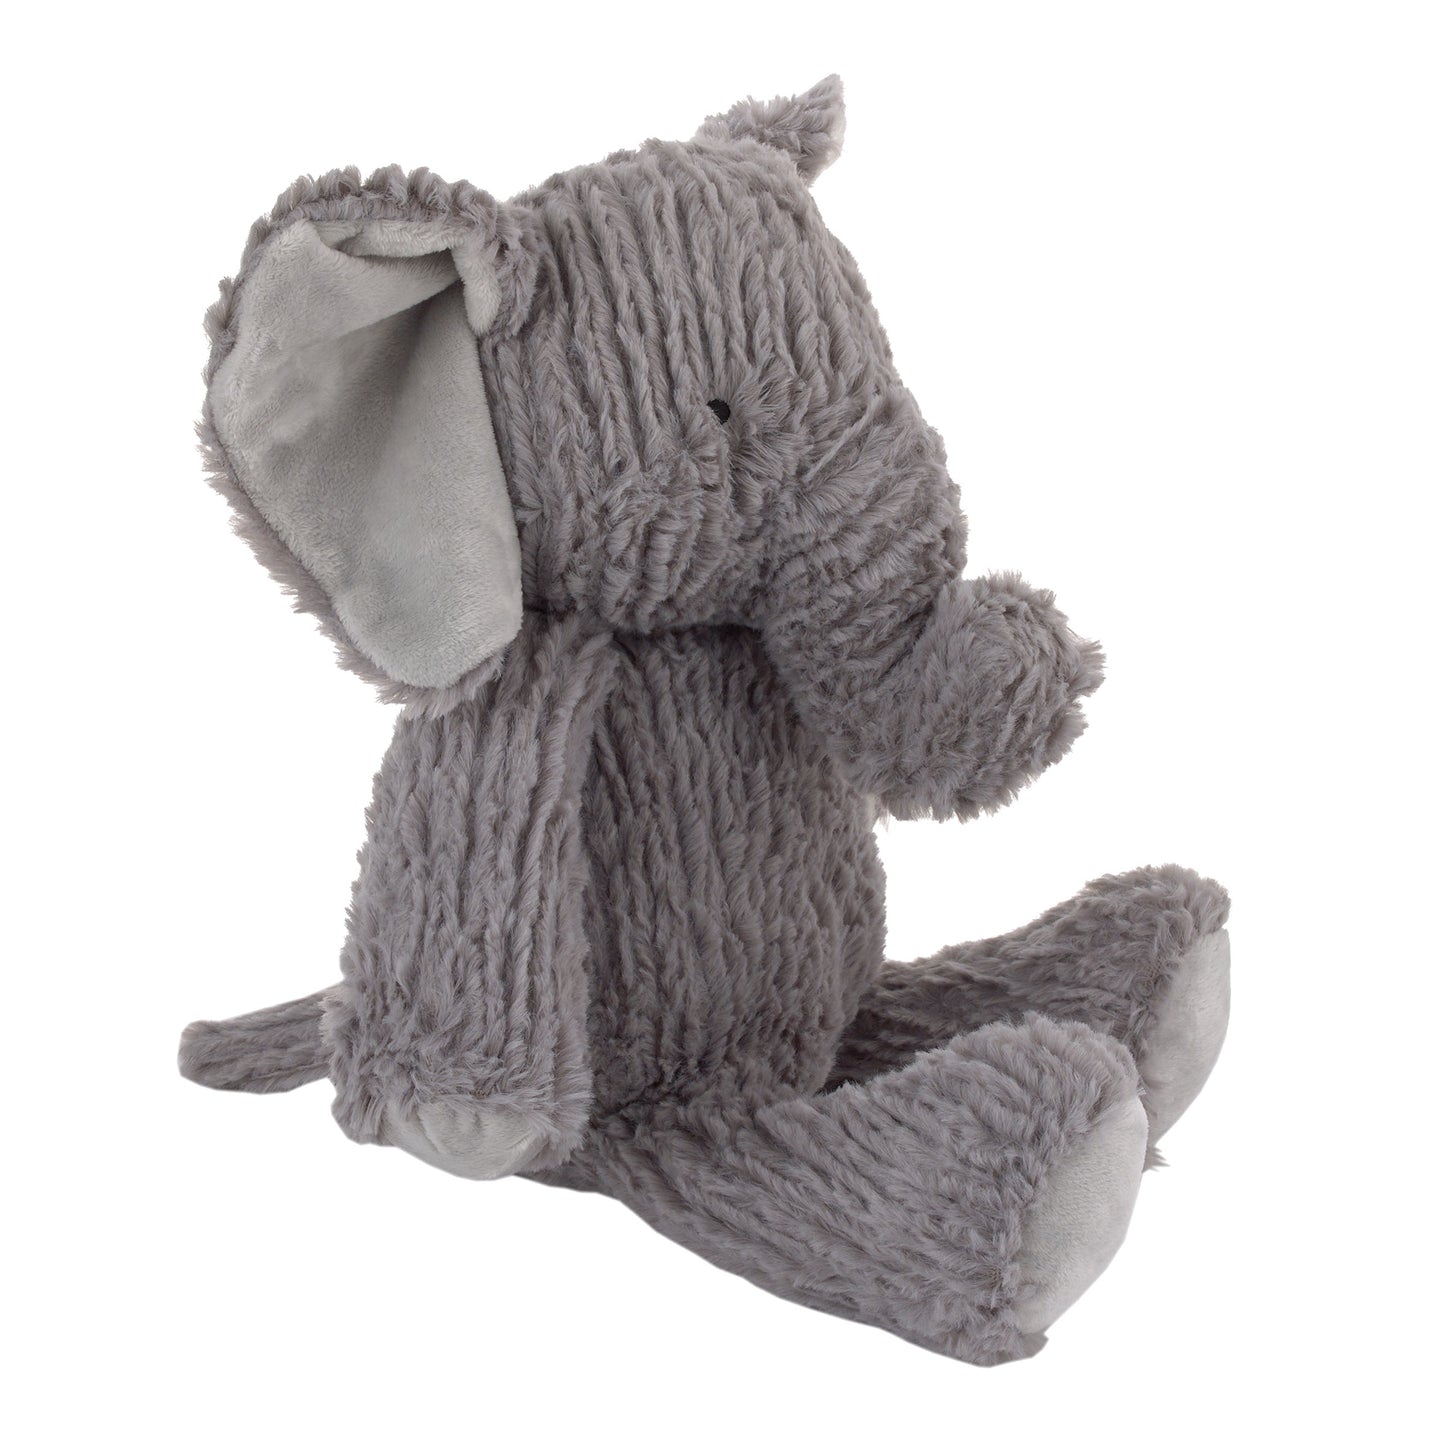 NoJo Gray Elephant Super Soft Plush Stuffed Animal